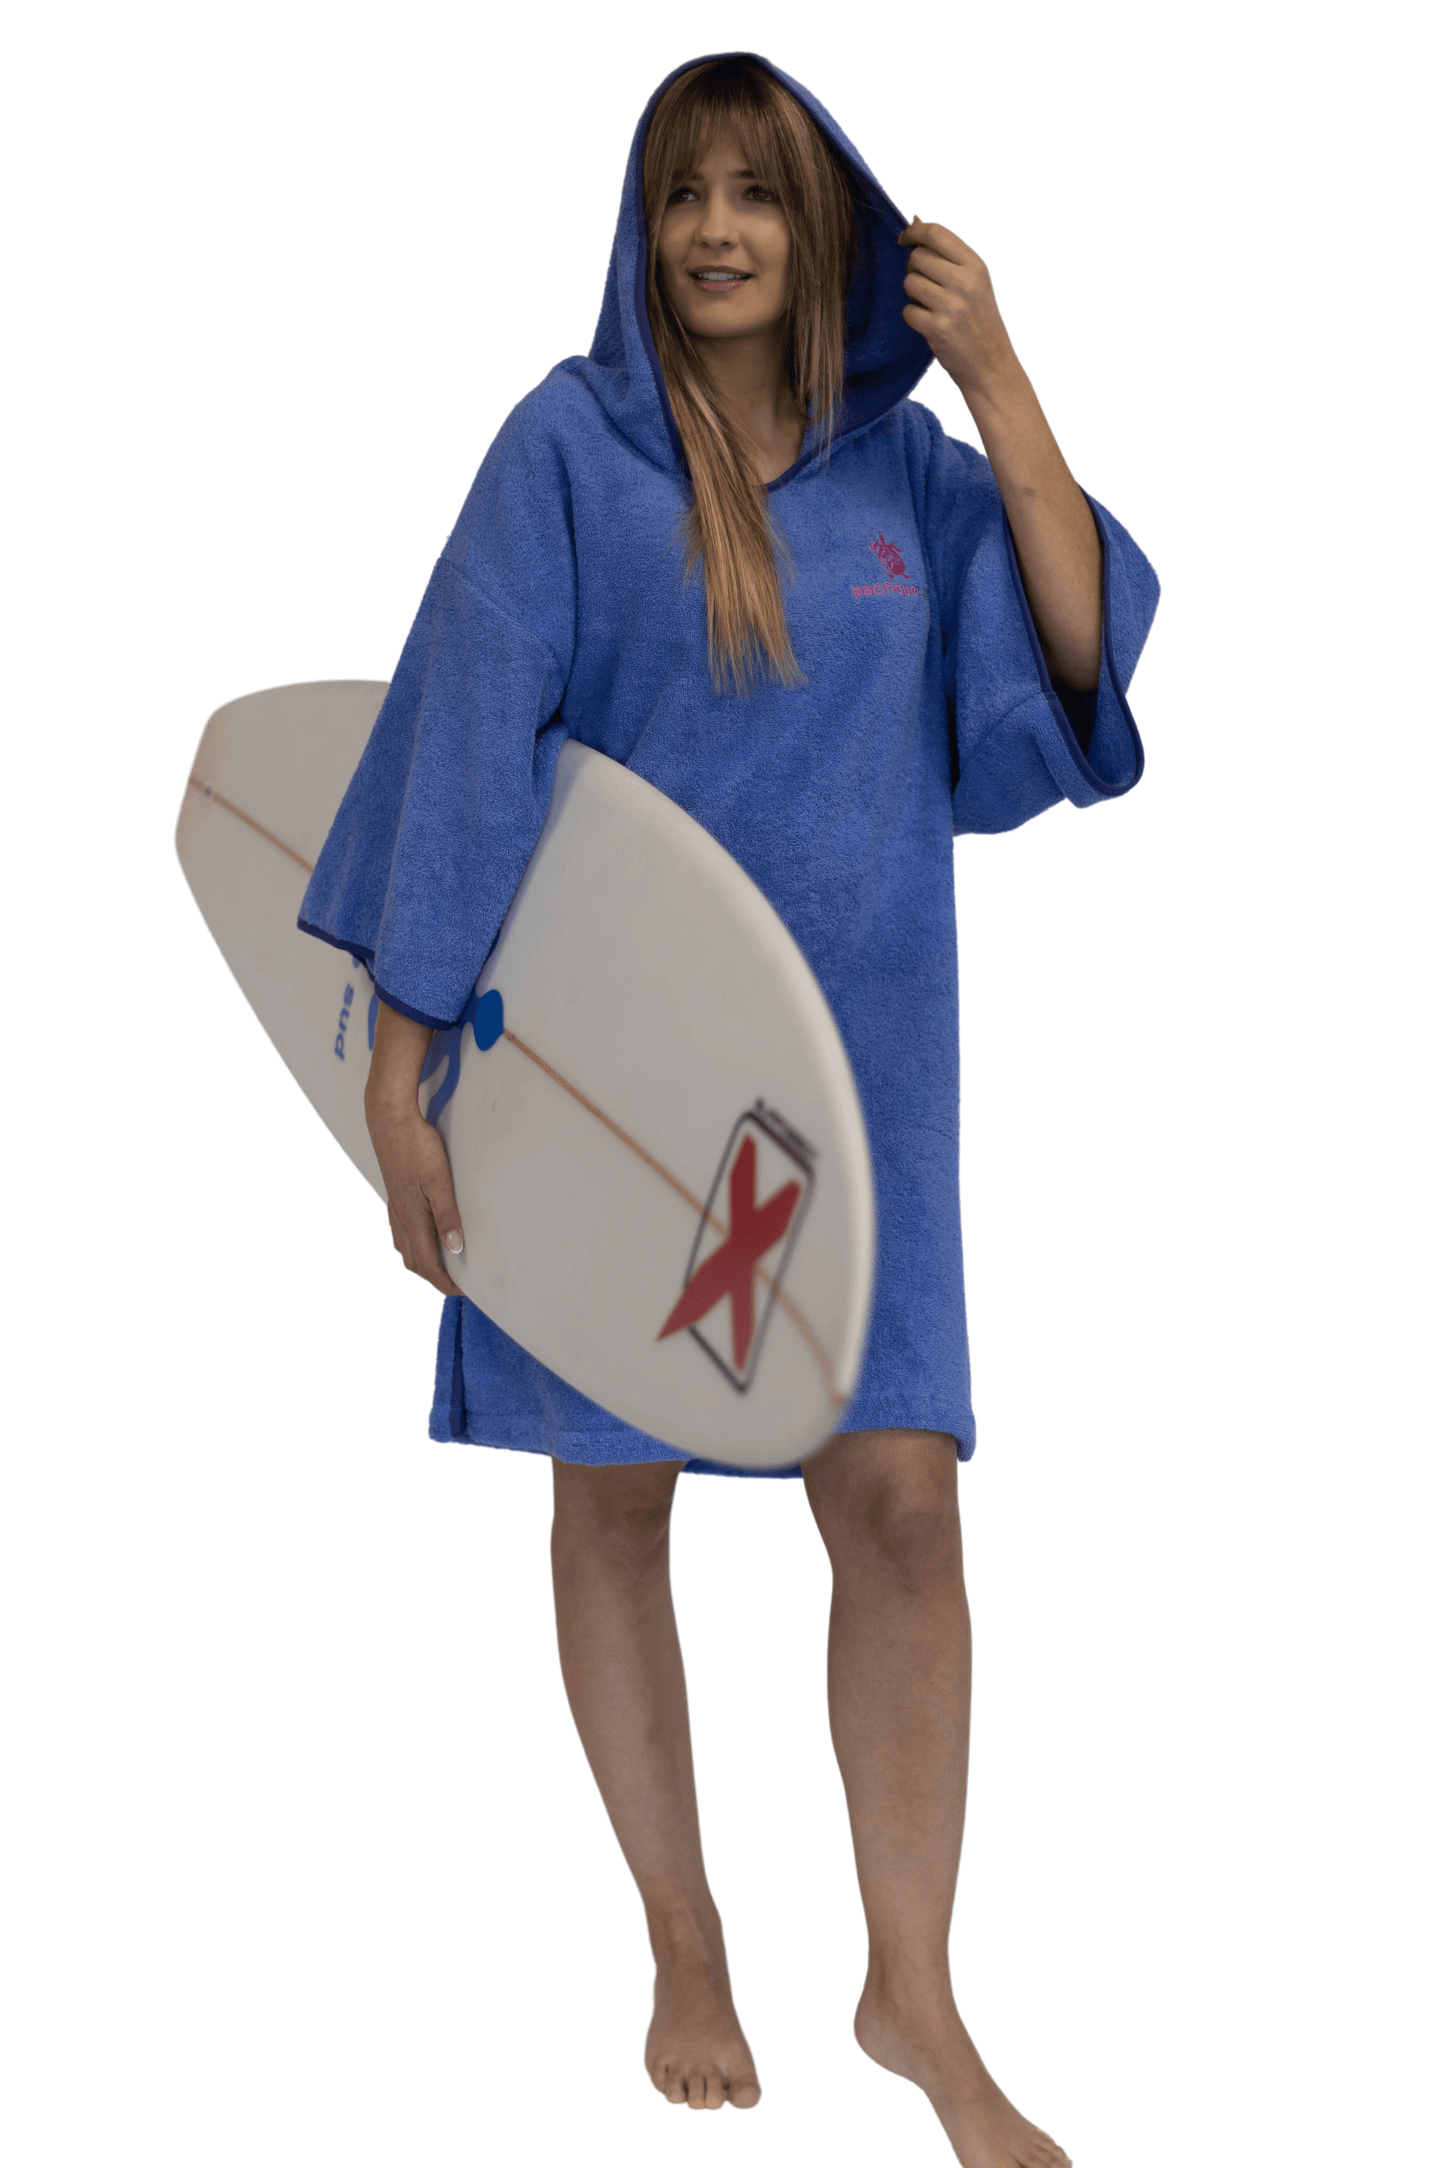 Poncho de surf púrpura - Talla única - con mangas